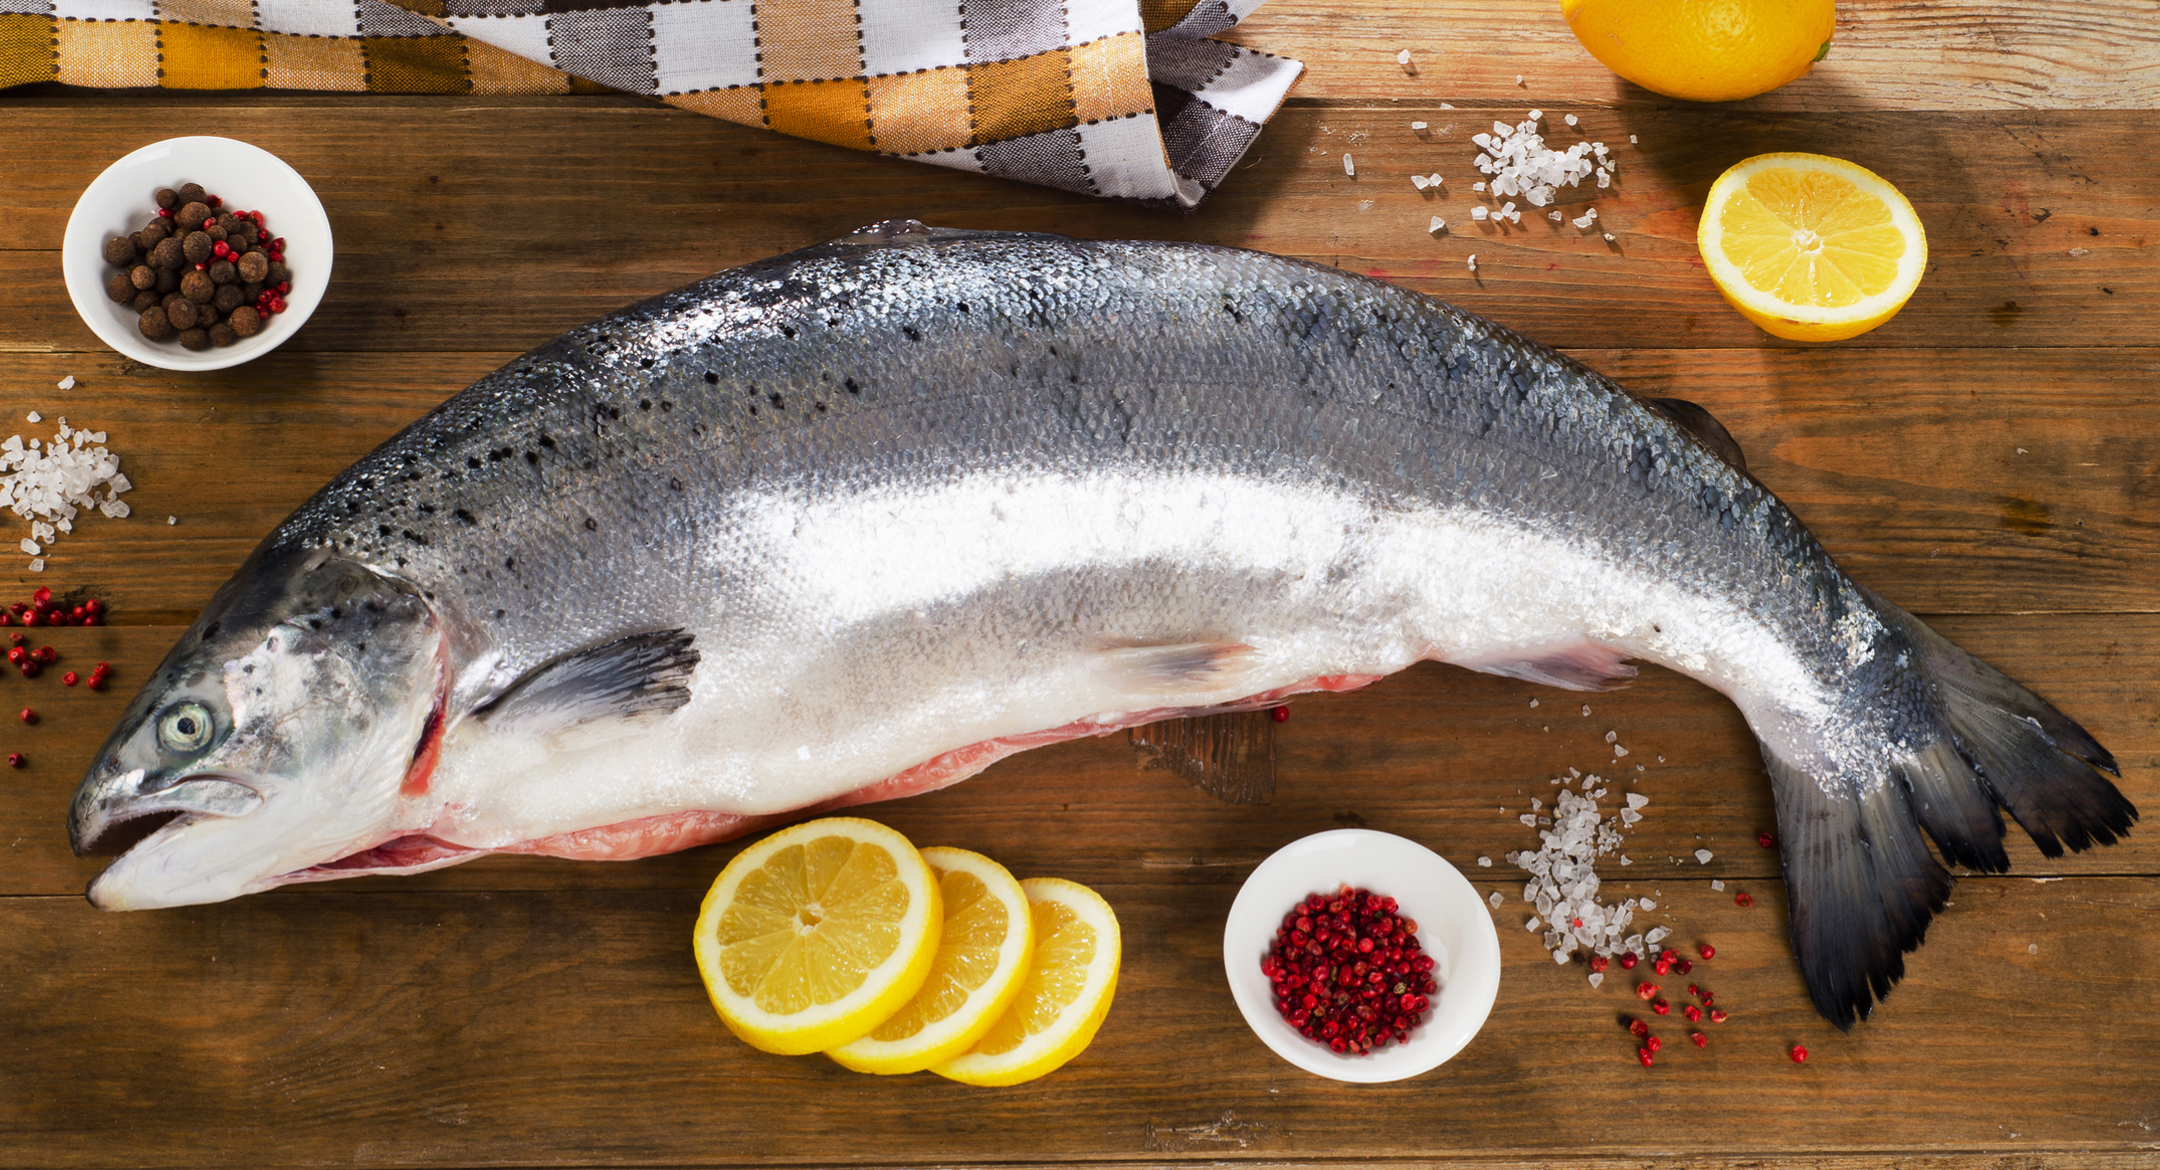 Fresh Atlantic salmon. Credit: bitt24/Shutterstock.com